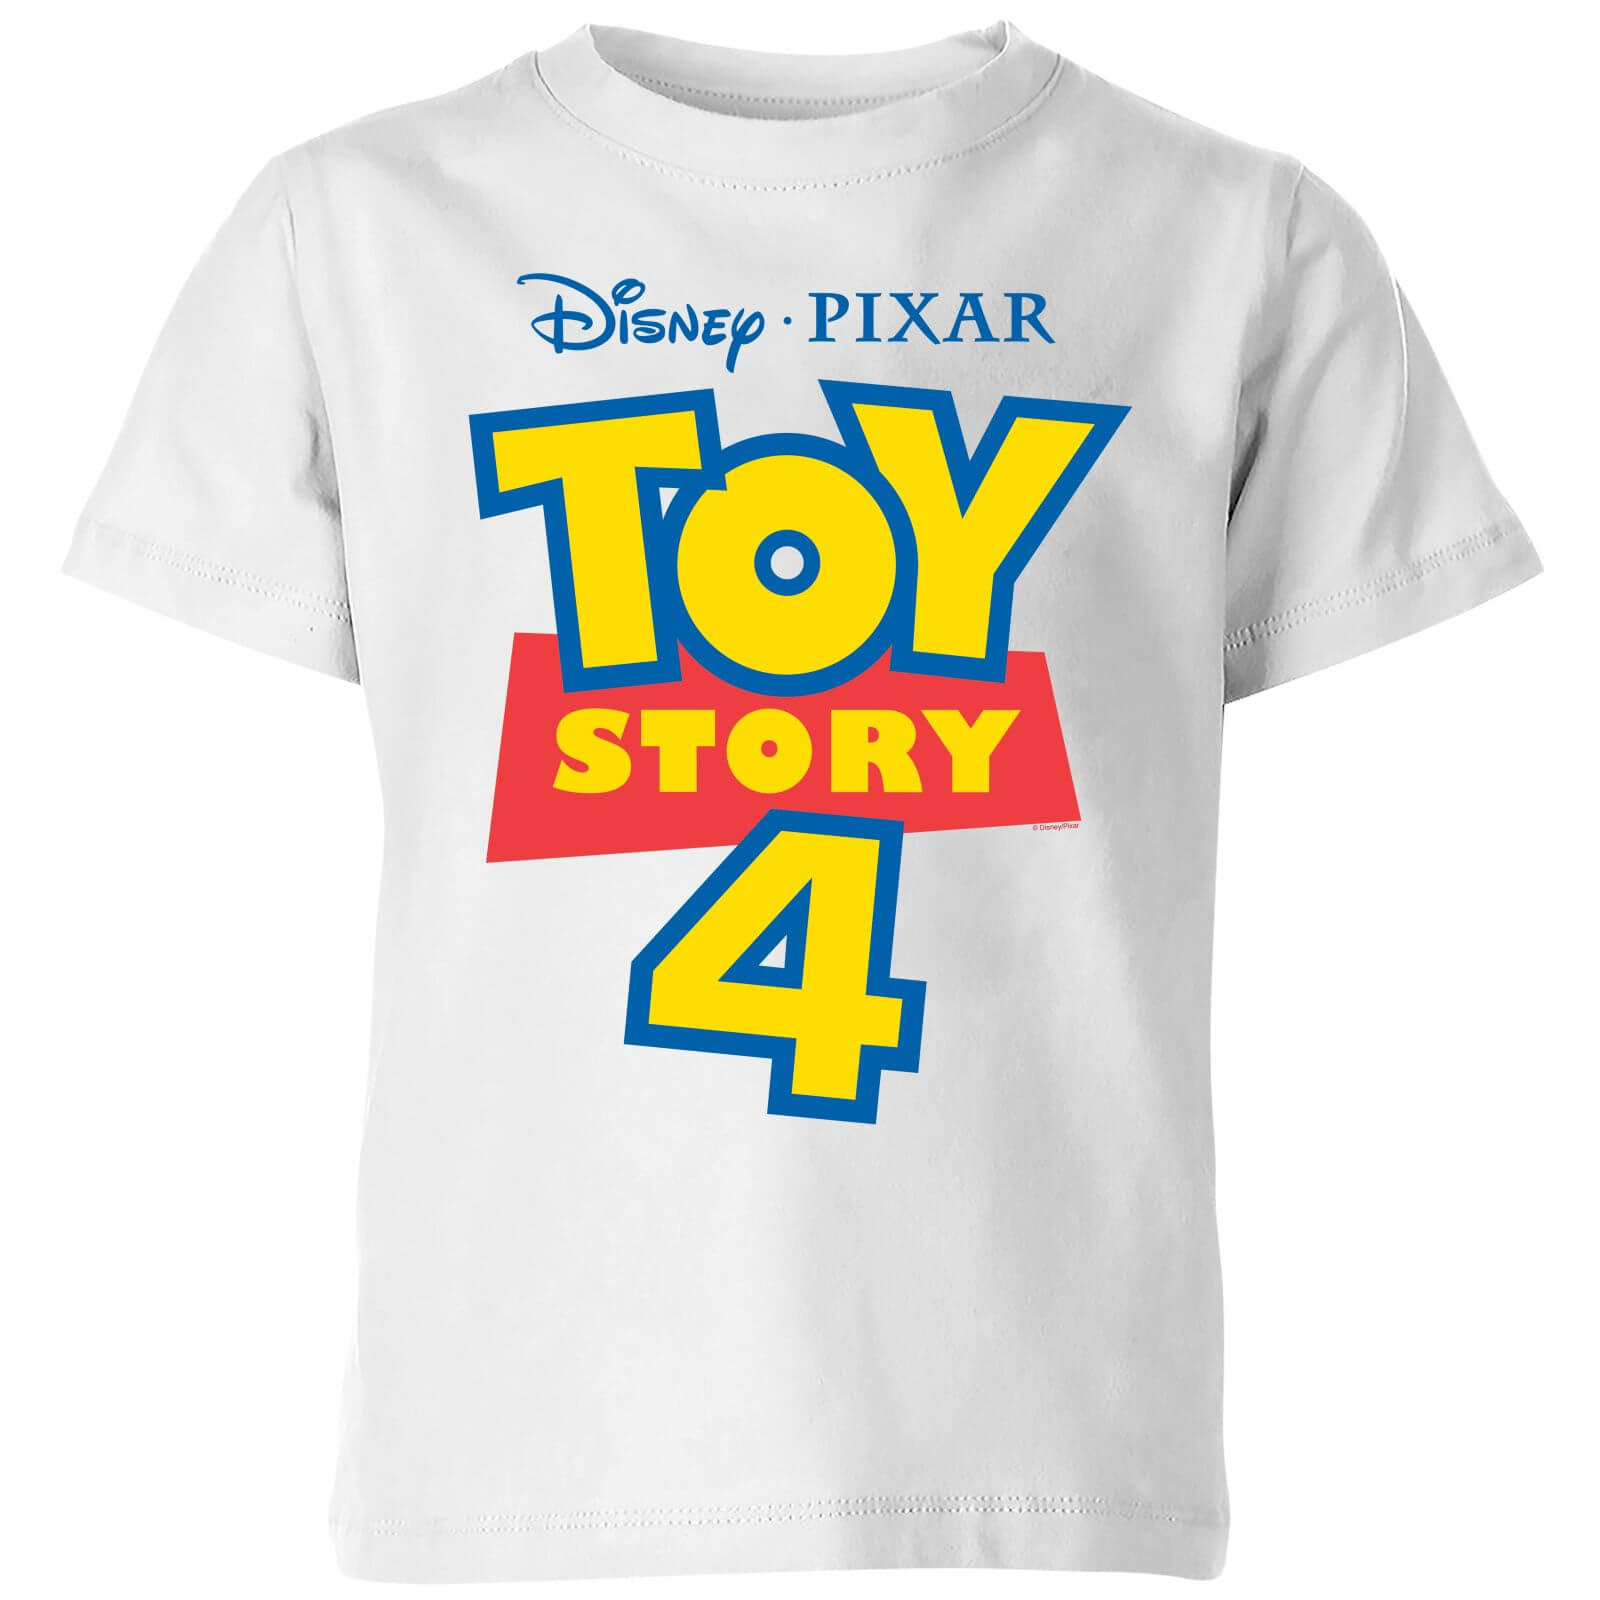 Pixar Toy Story 4 Logo Kids' T-Shirt - White - 7-8 Years - White